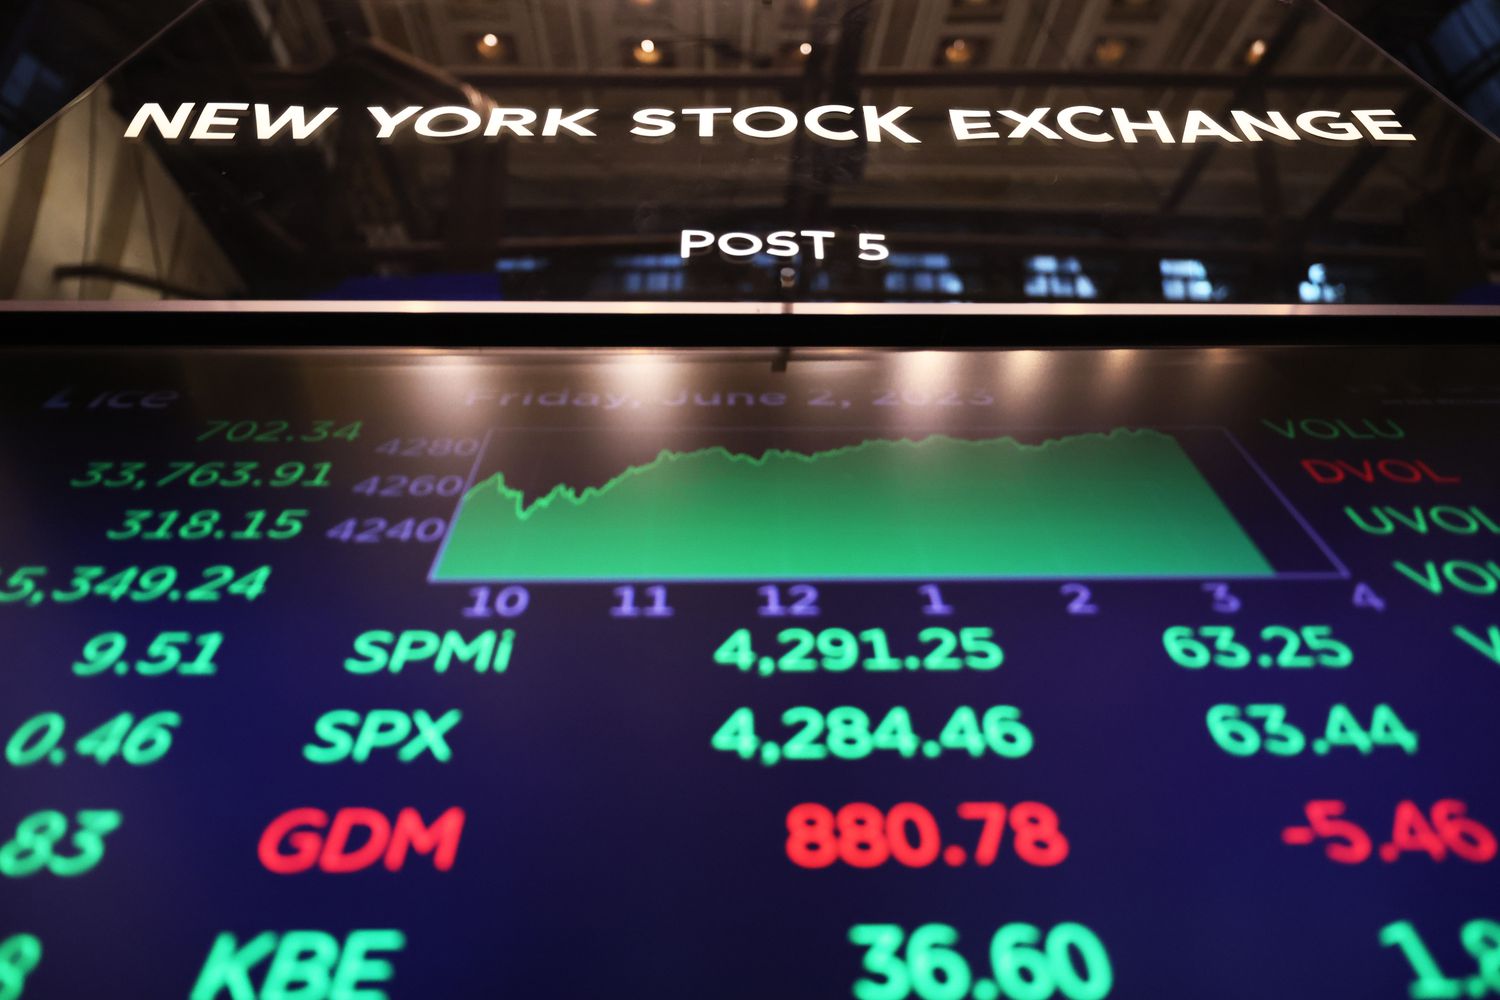 Newyork stock exchange shown